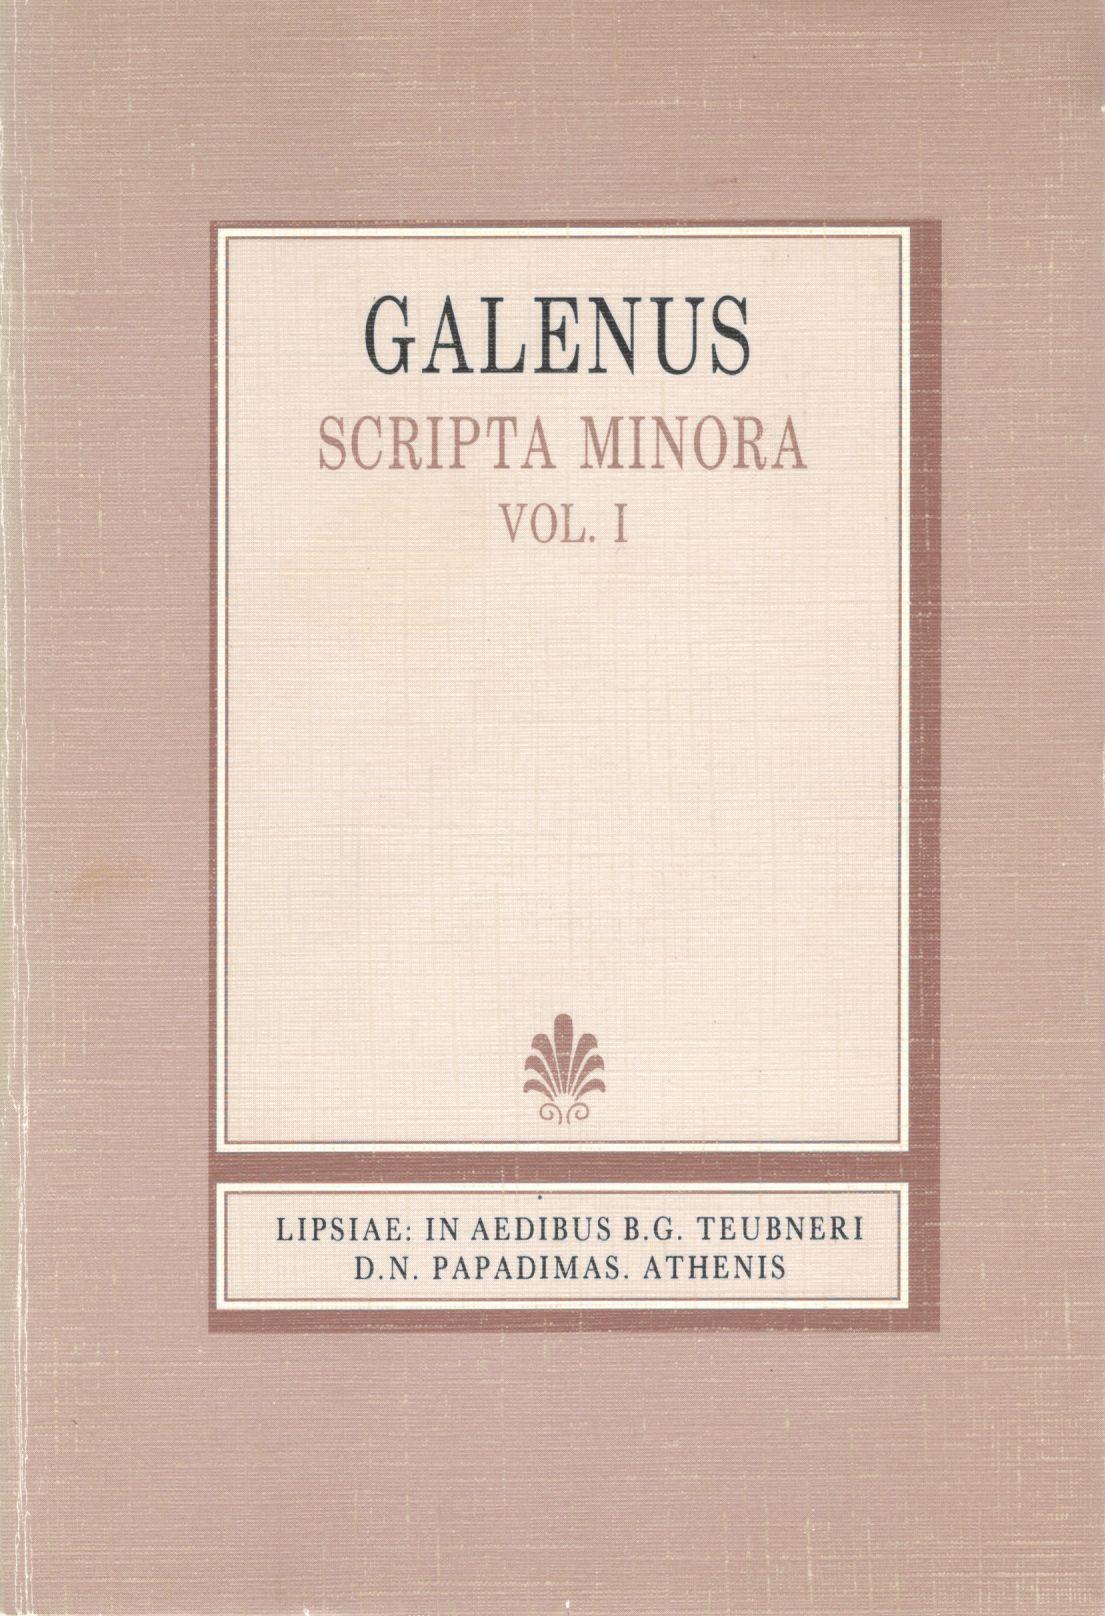 Galeni, Scripta Minora, Vol. I [Γαληνού, 